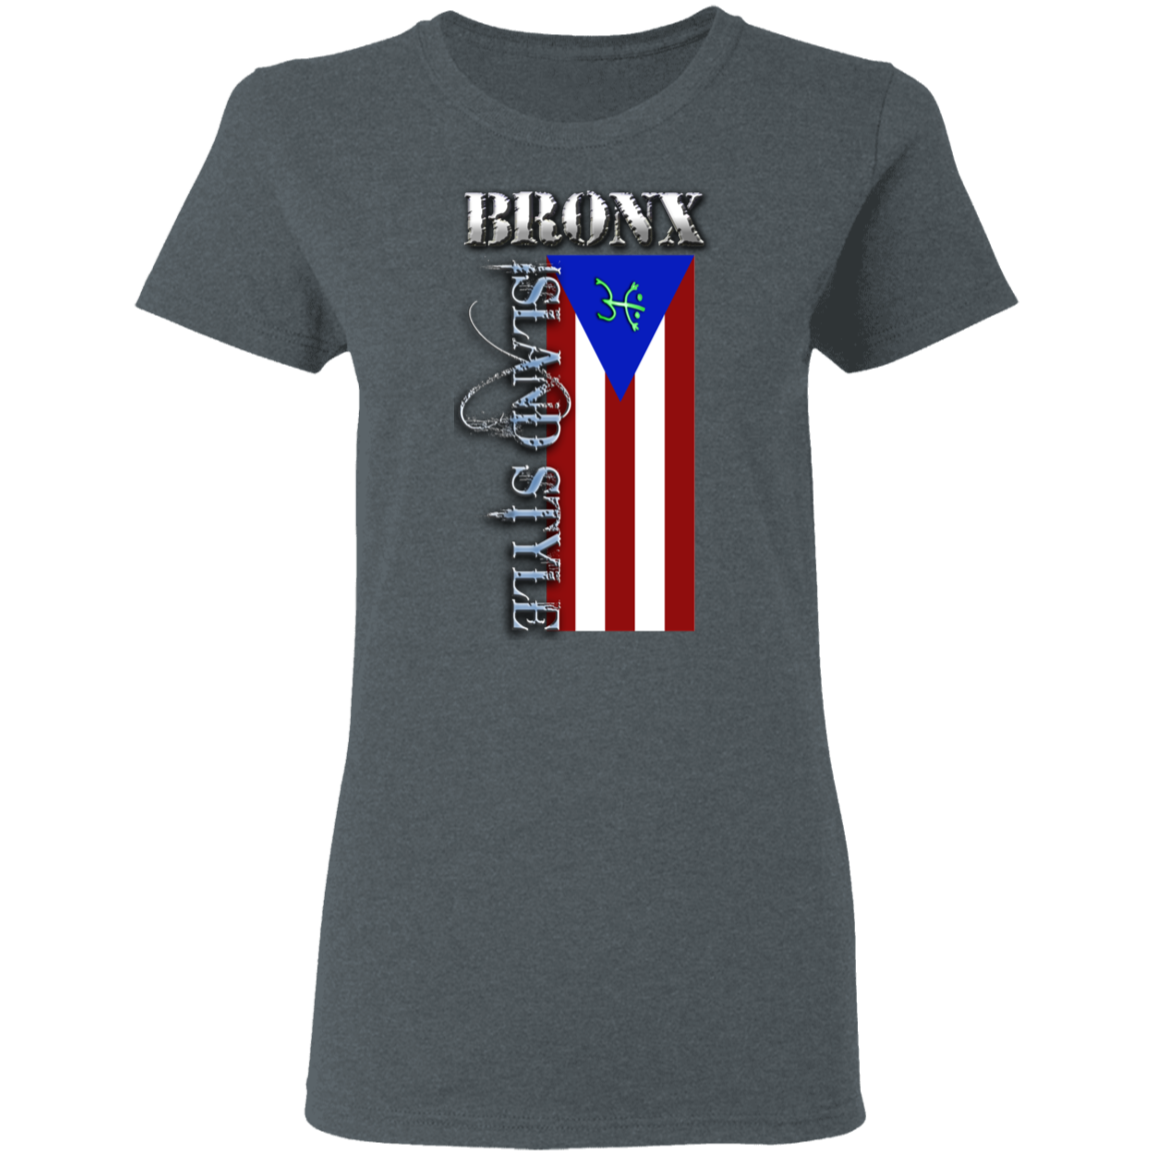 Bronx Ladies Island Style 5.3 oz. T-Shirt